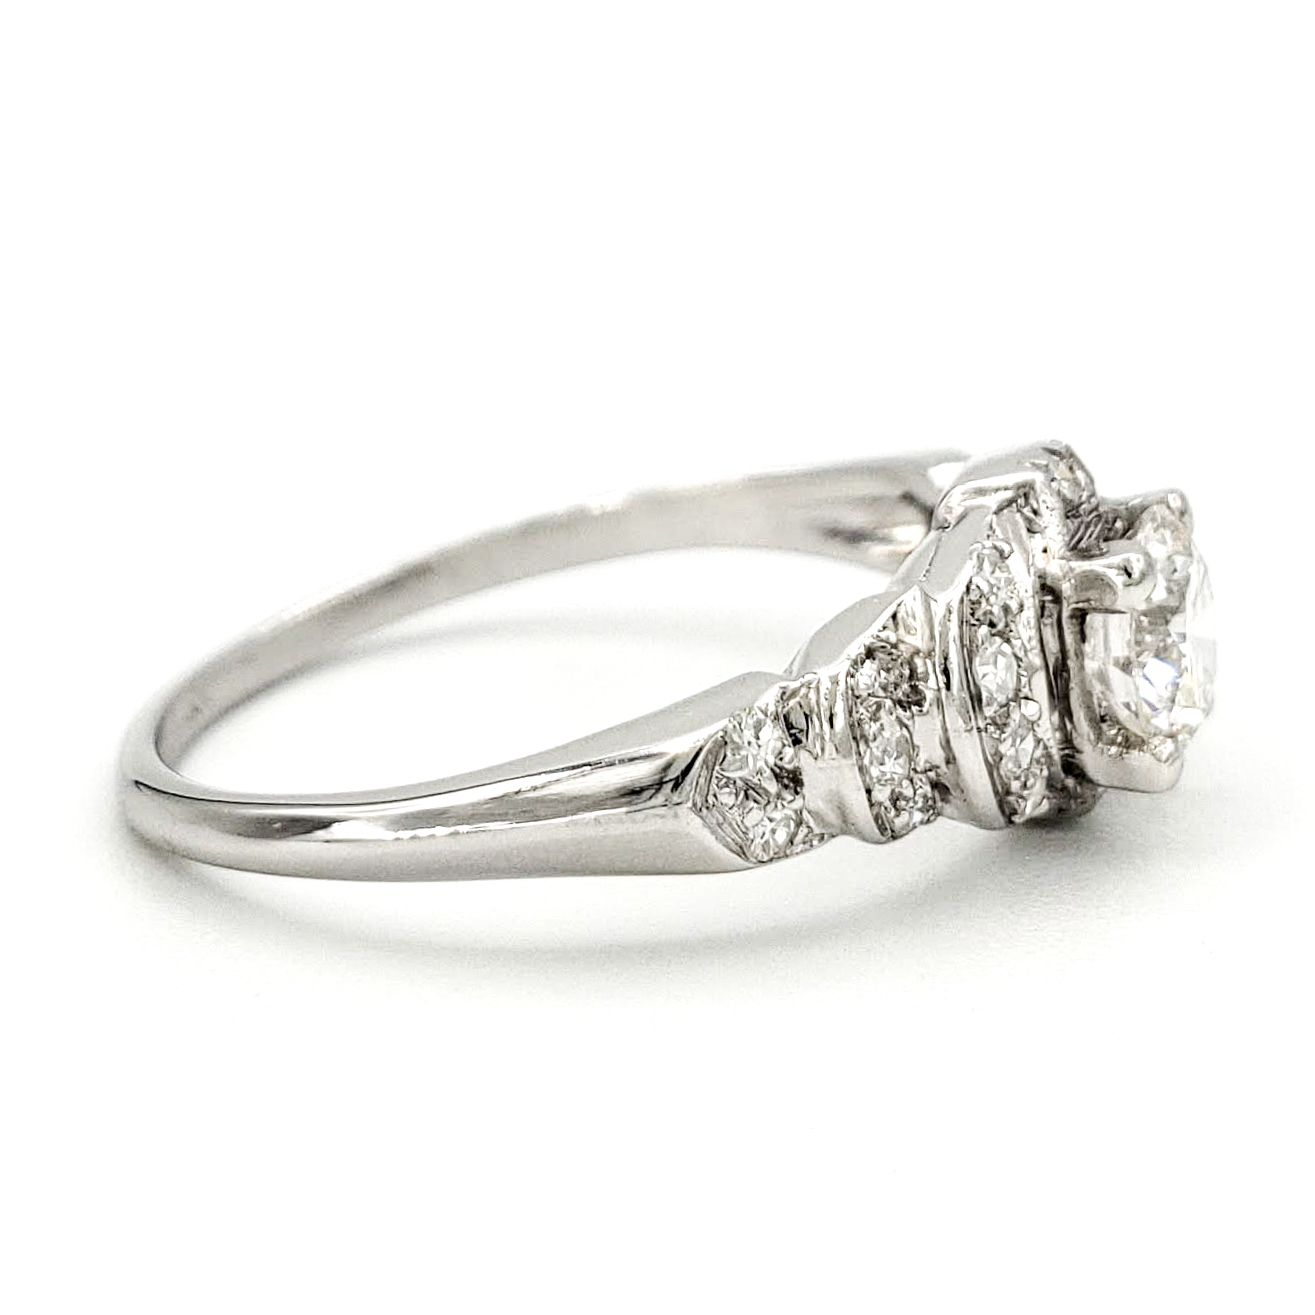 vintage-platinum-engagement-ring-with-0-43-carat-round-brilliant-cut-diamond-gia-h-si1